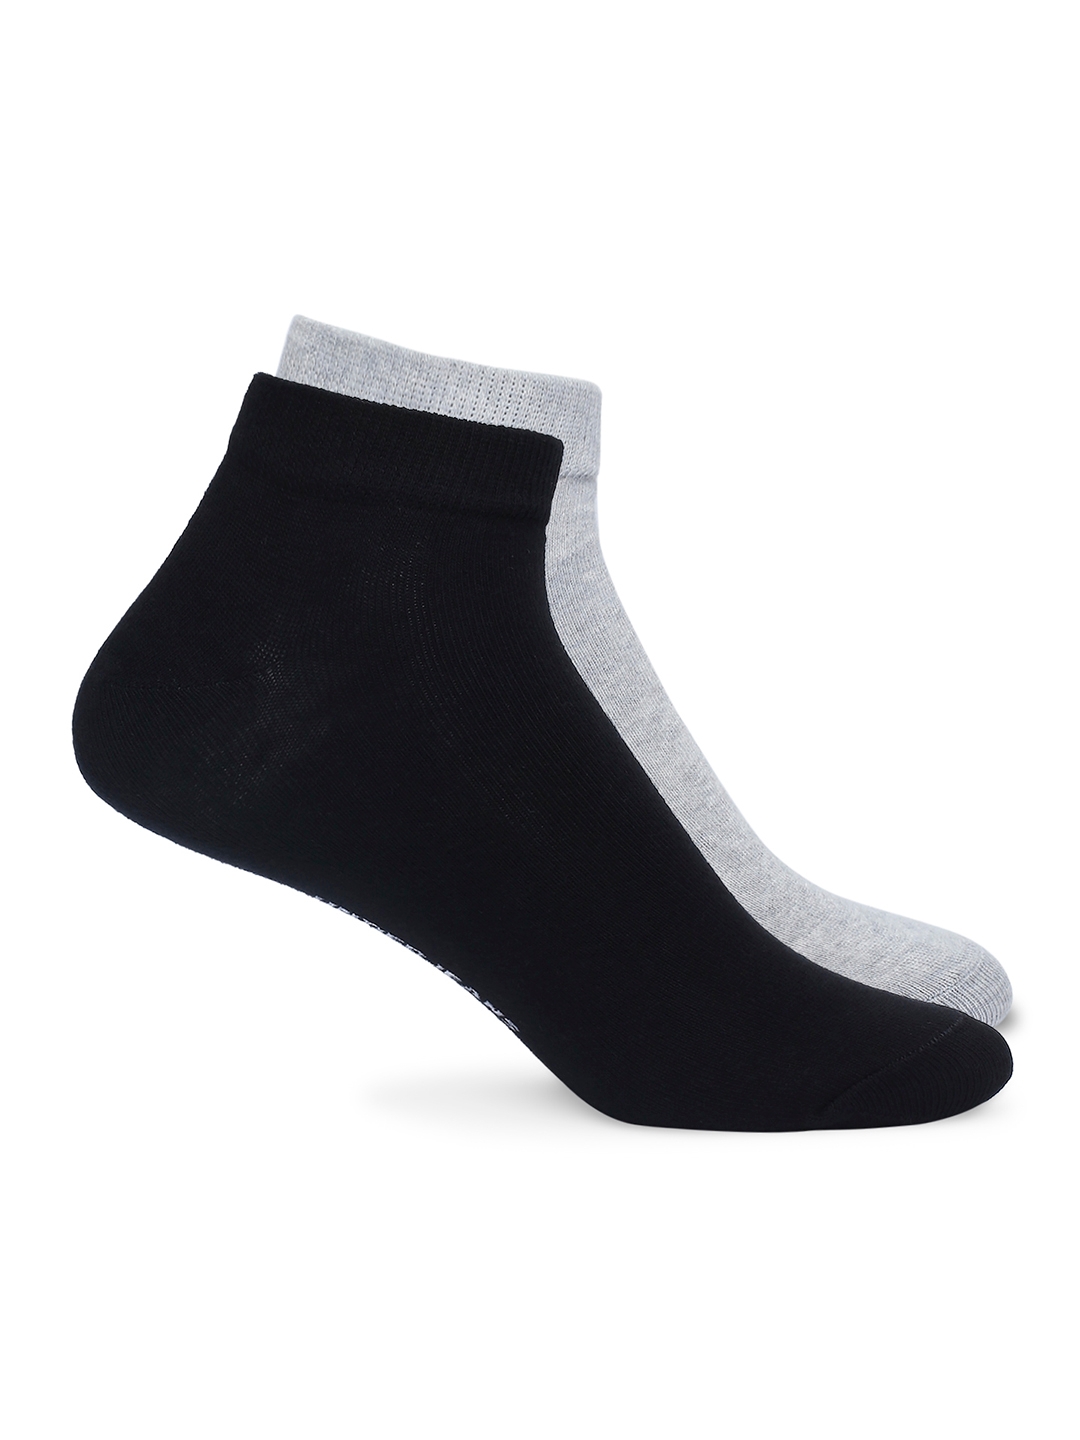 spykar | Underjeans By Spykar Men Grey Melange & Black Cotton Blend Sneaker Socks - Pack Of 2